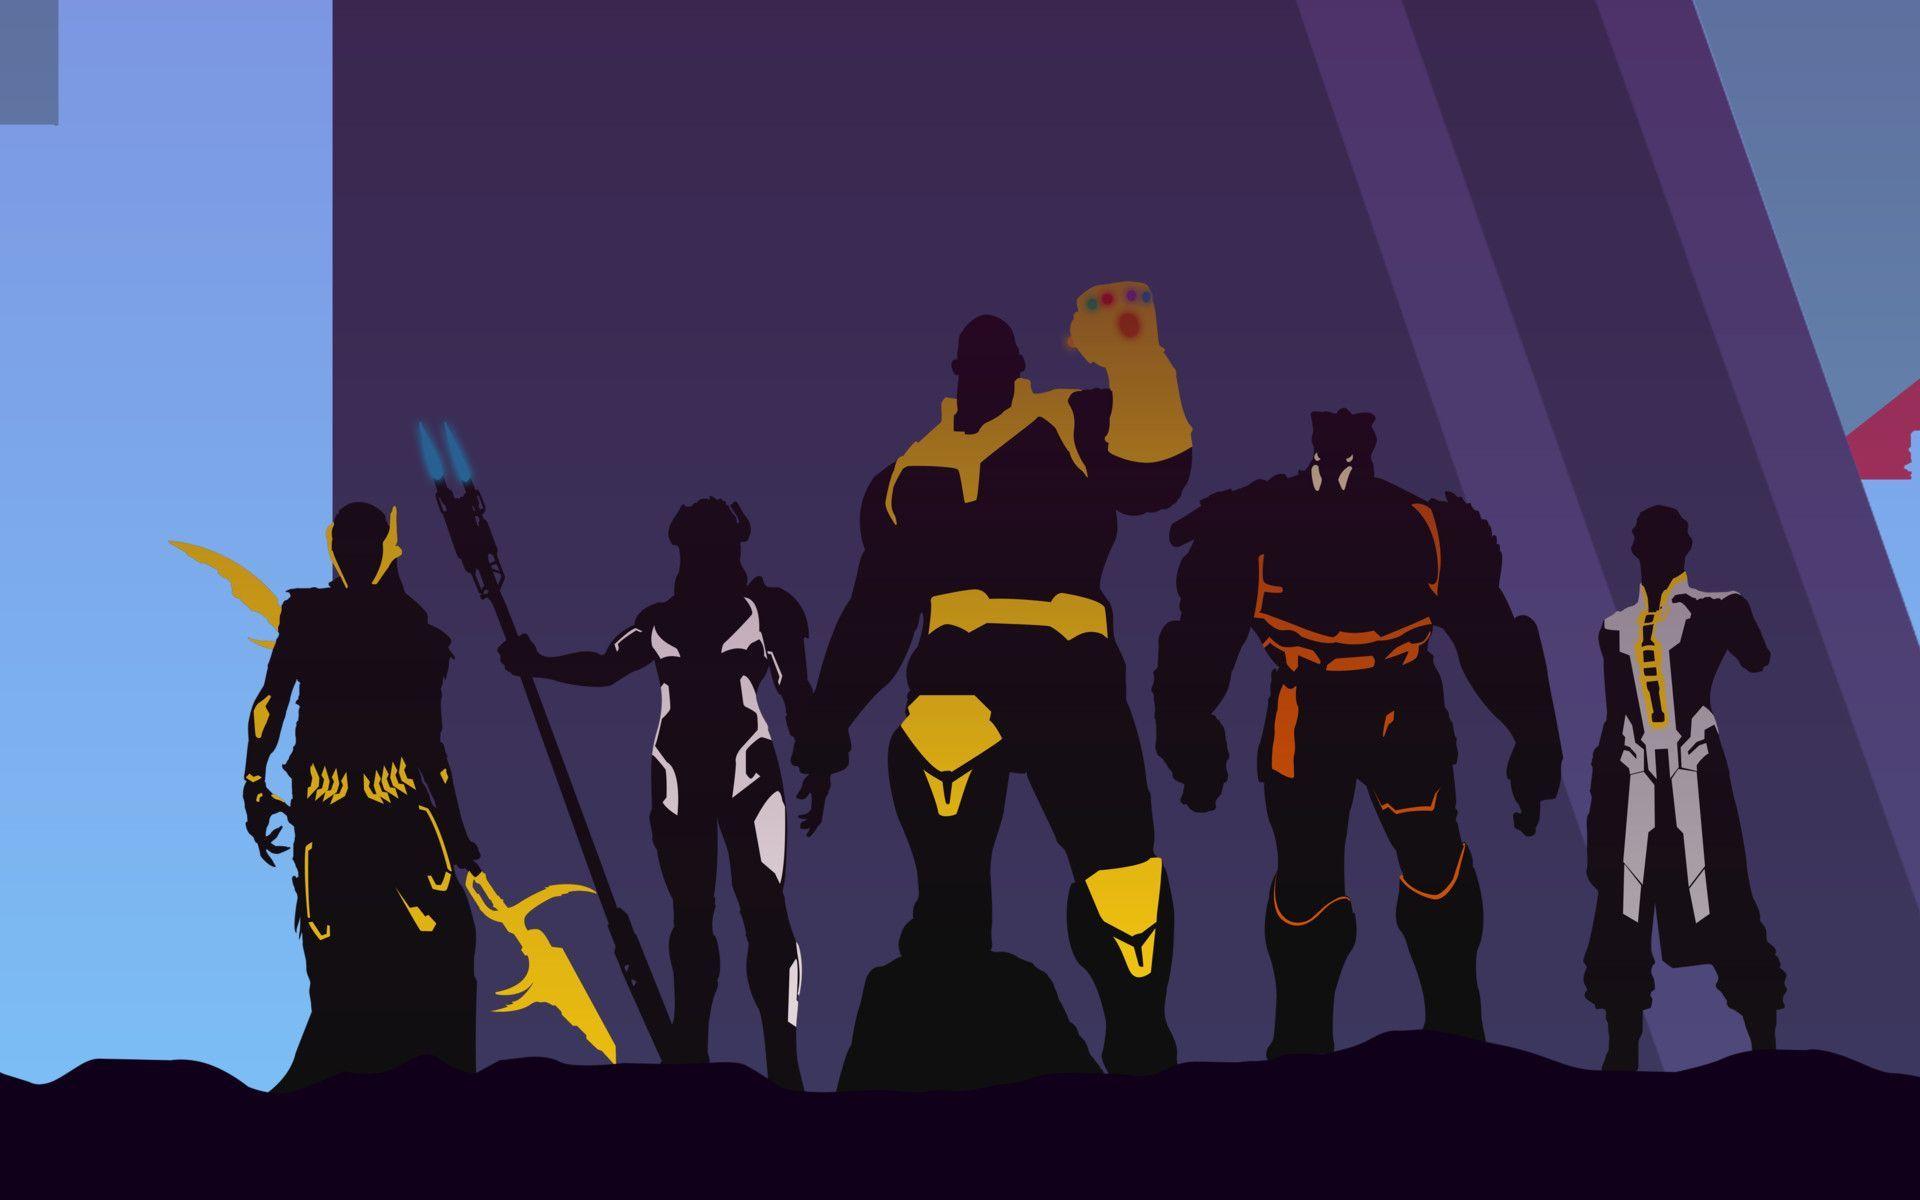 Thanos Avengers Infinity War 80S Outrun Art Wallpapers